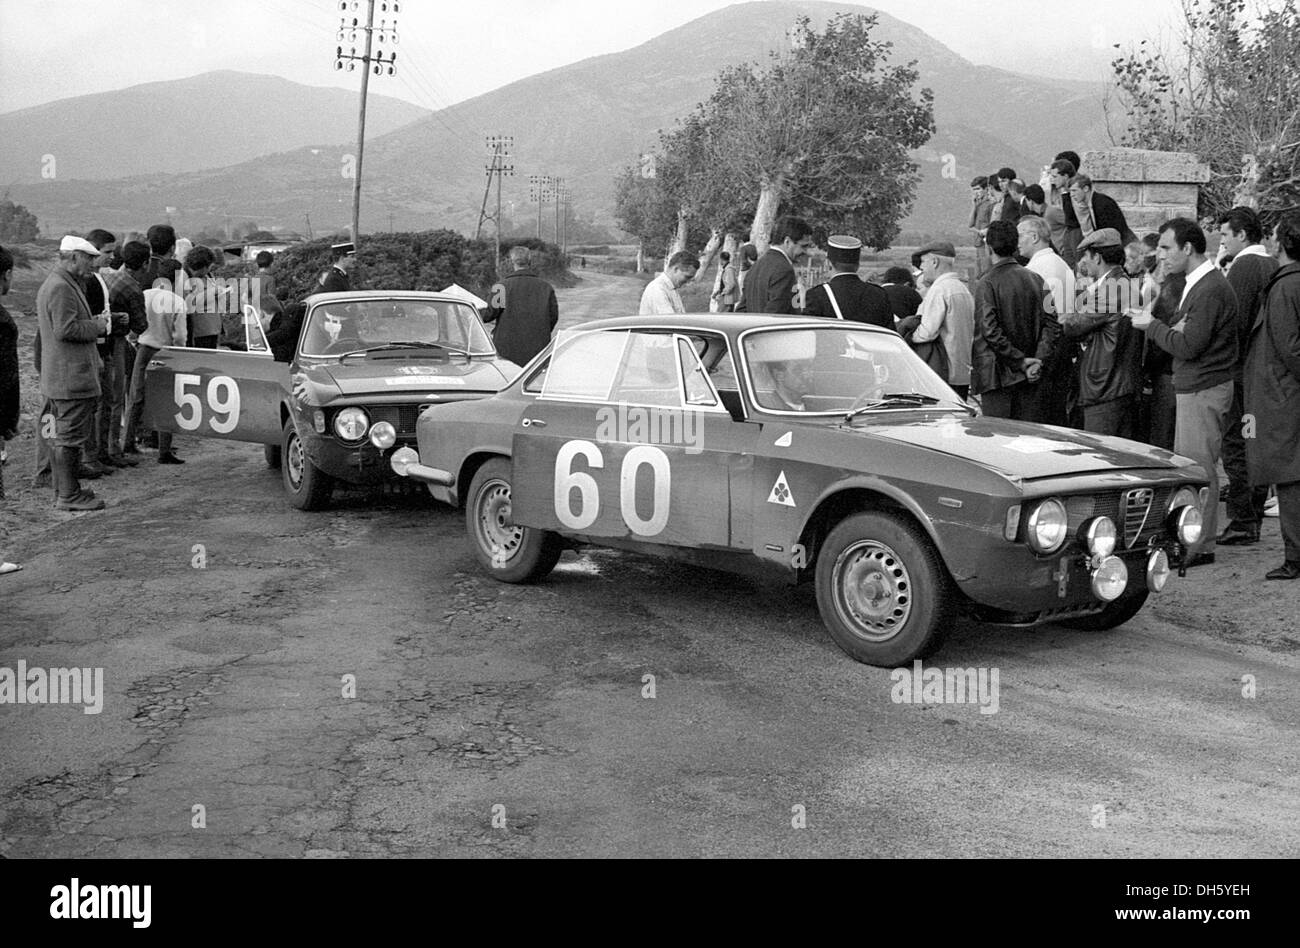 Alfa Romeo cgus dans le rallye corse, 1965. Banque D'Images